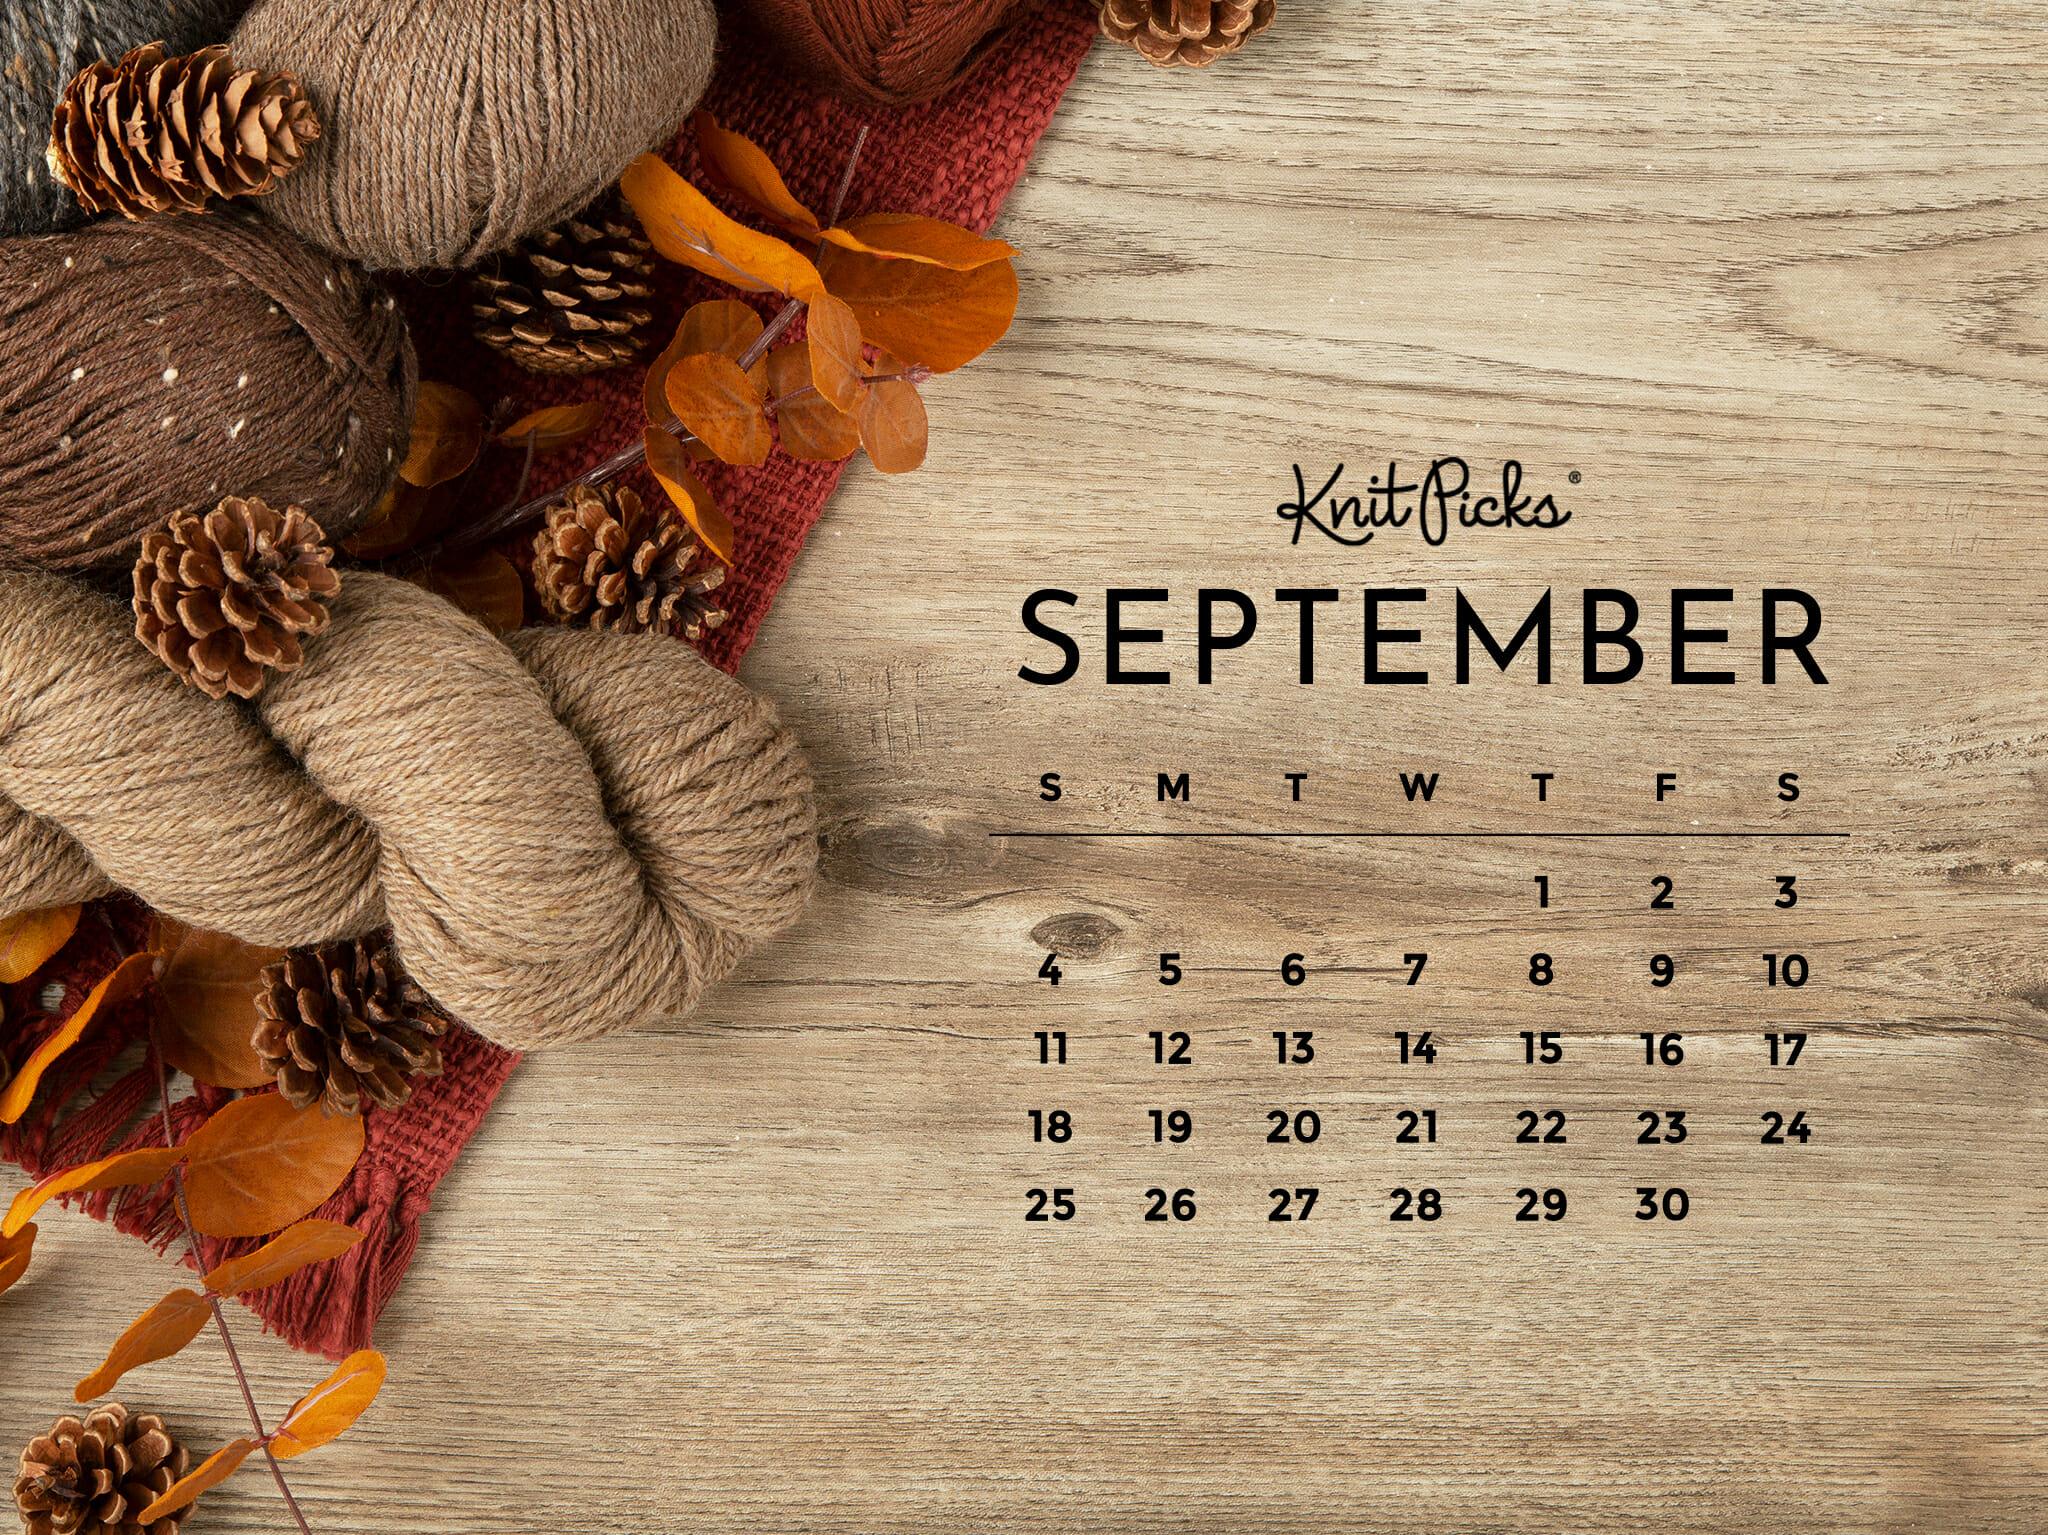 Able September Calendar The Knit Picks Staff